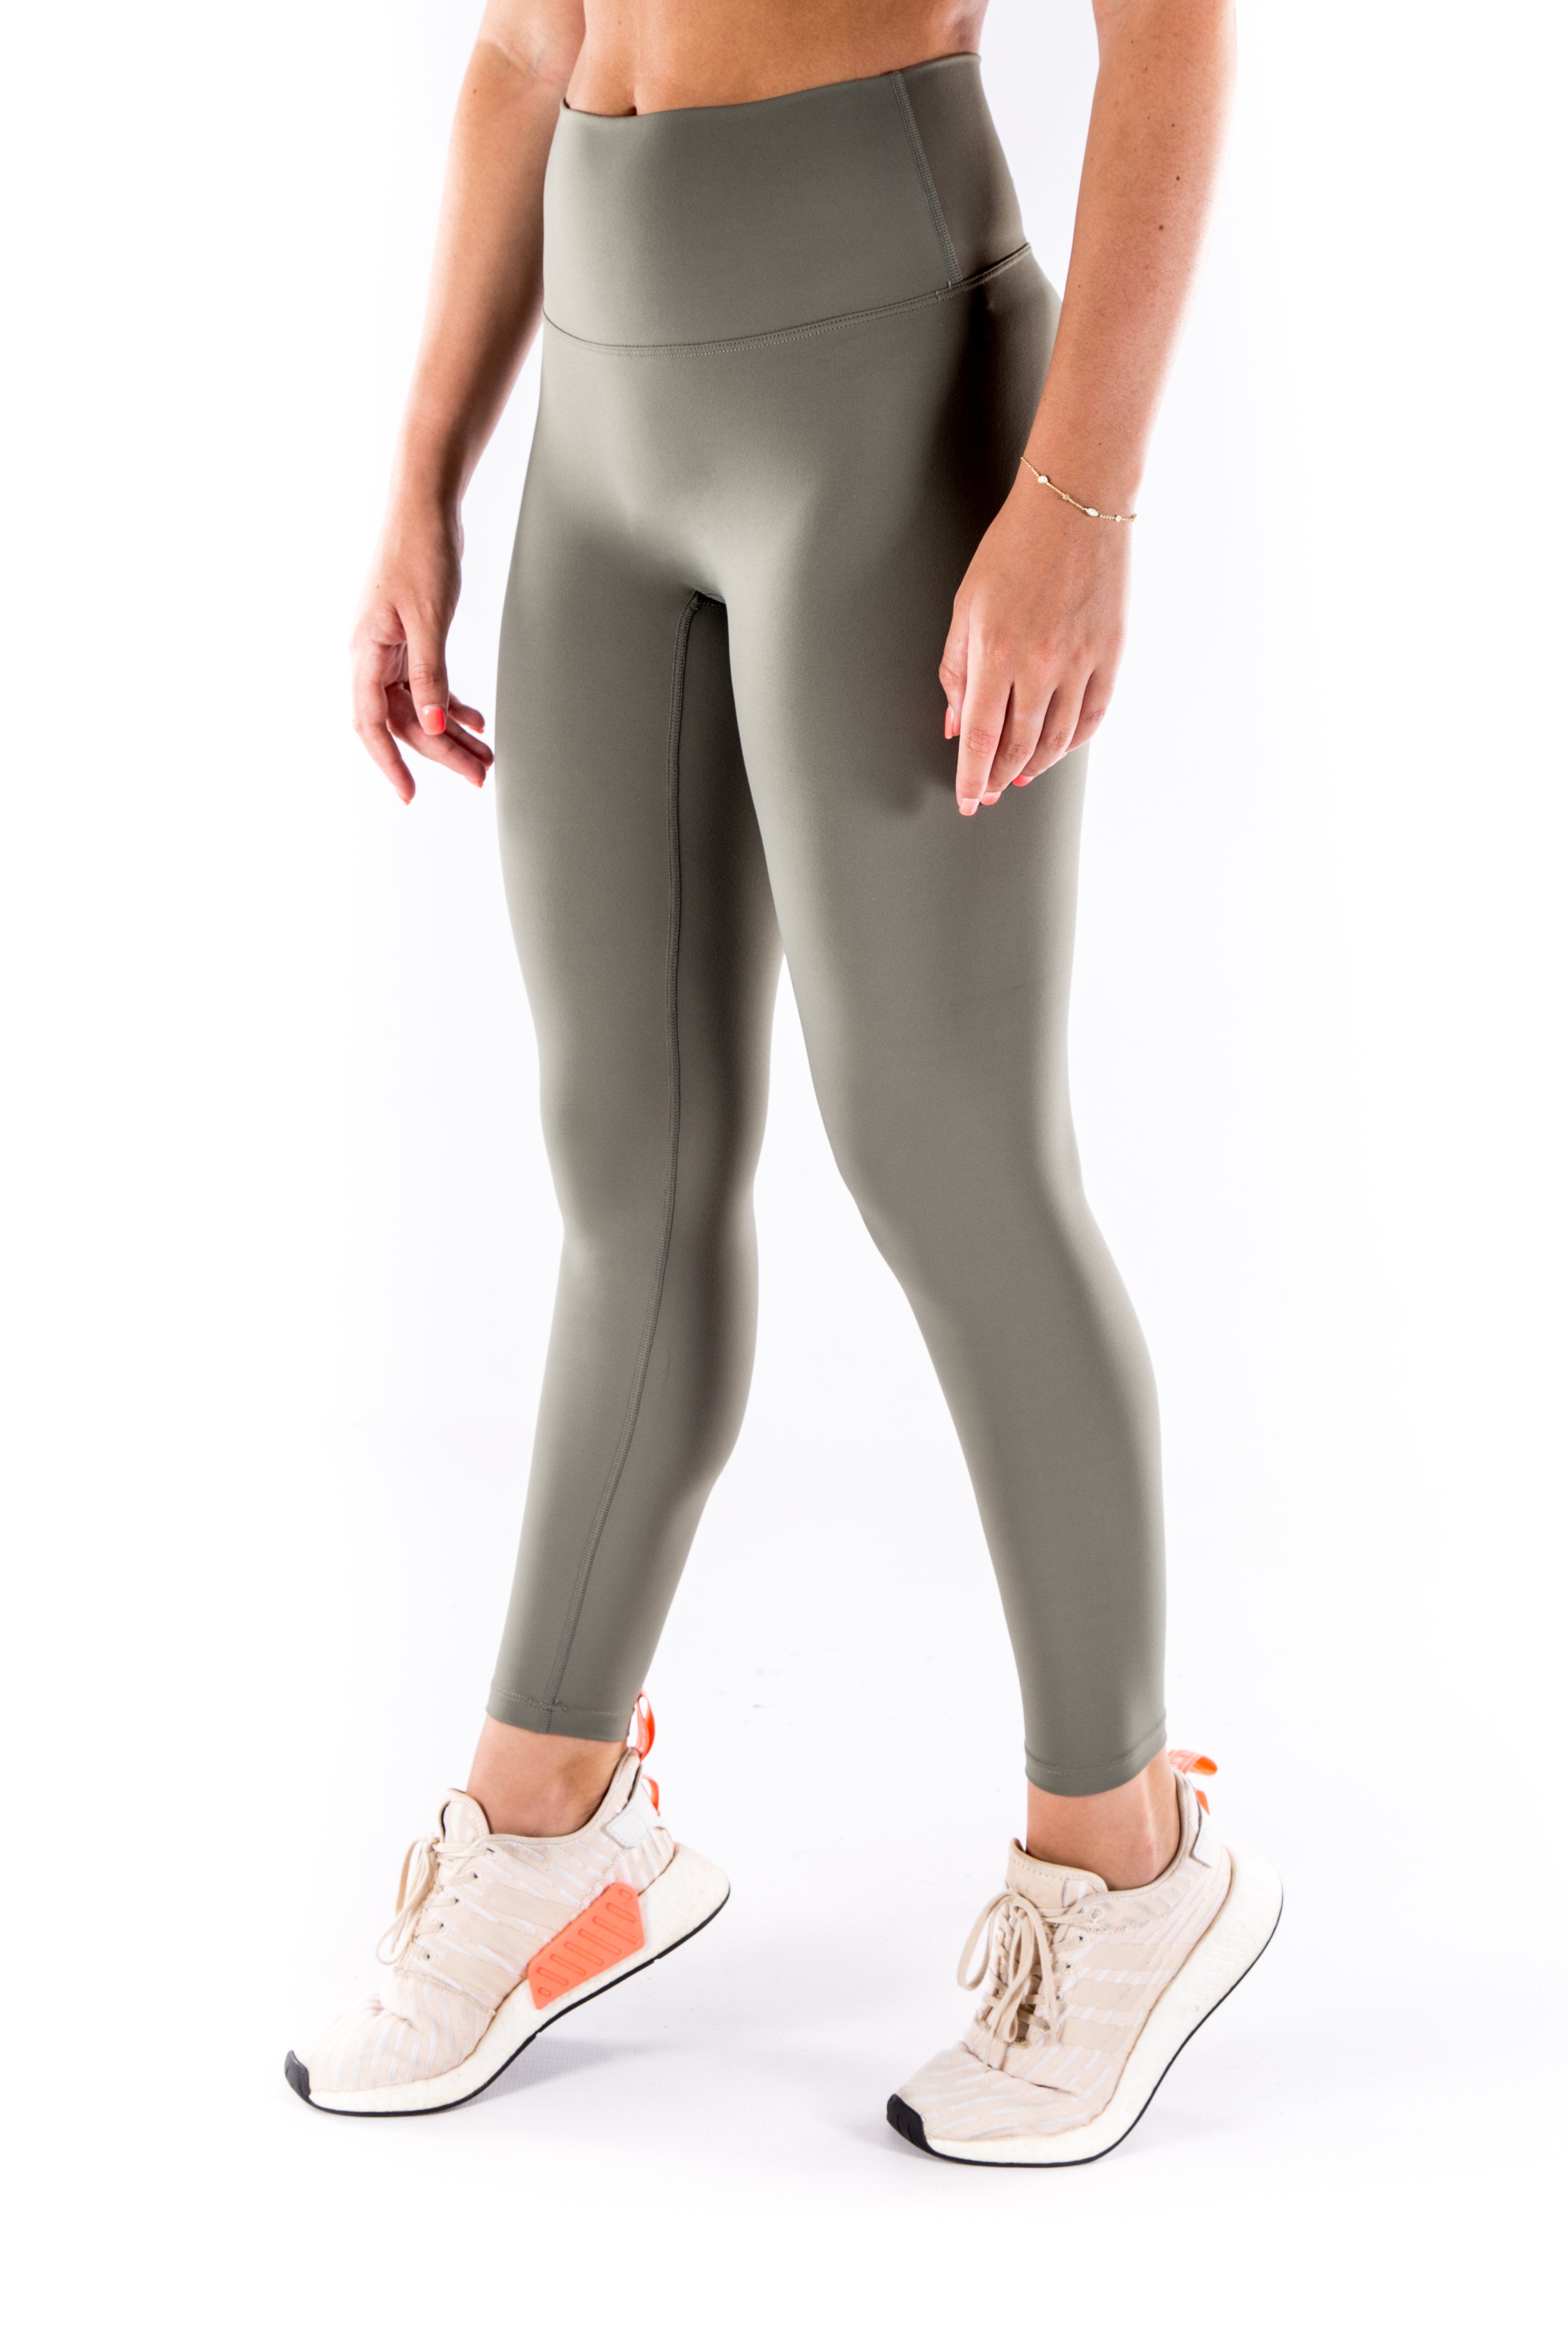 Image of Wonderfit Lulu  - Buttery soft Yoga Pants- Olive